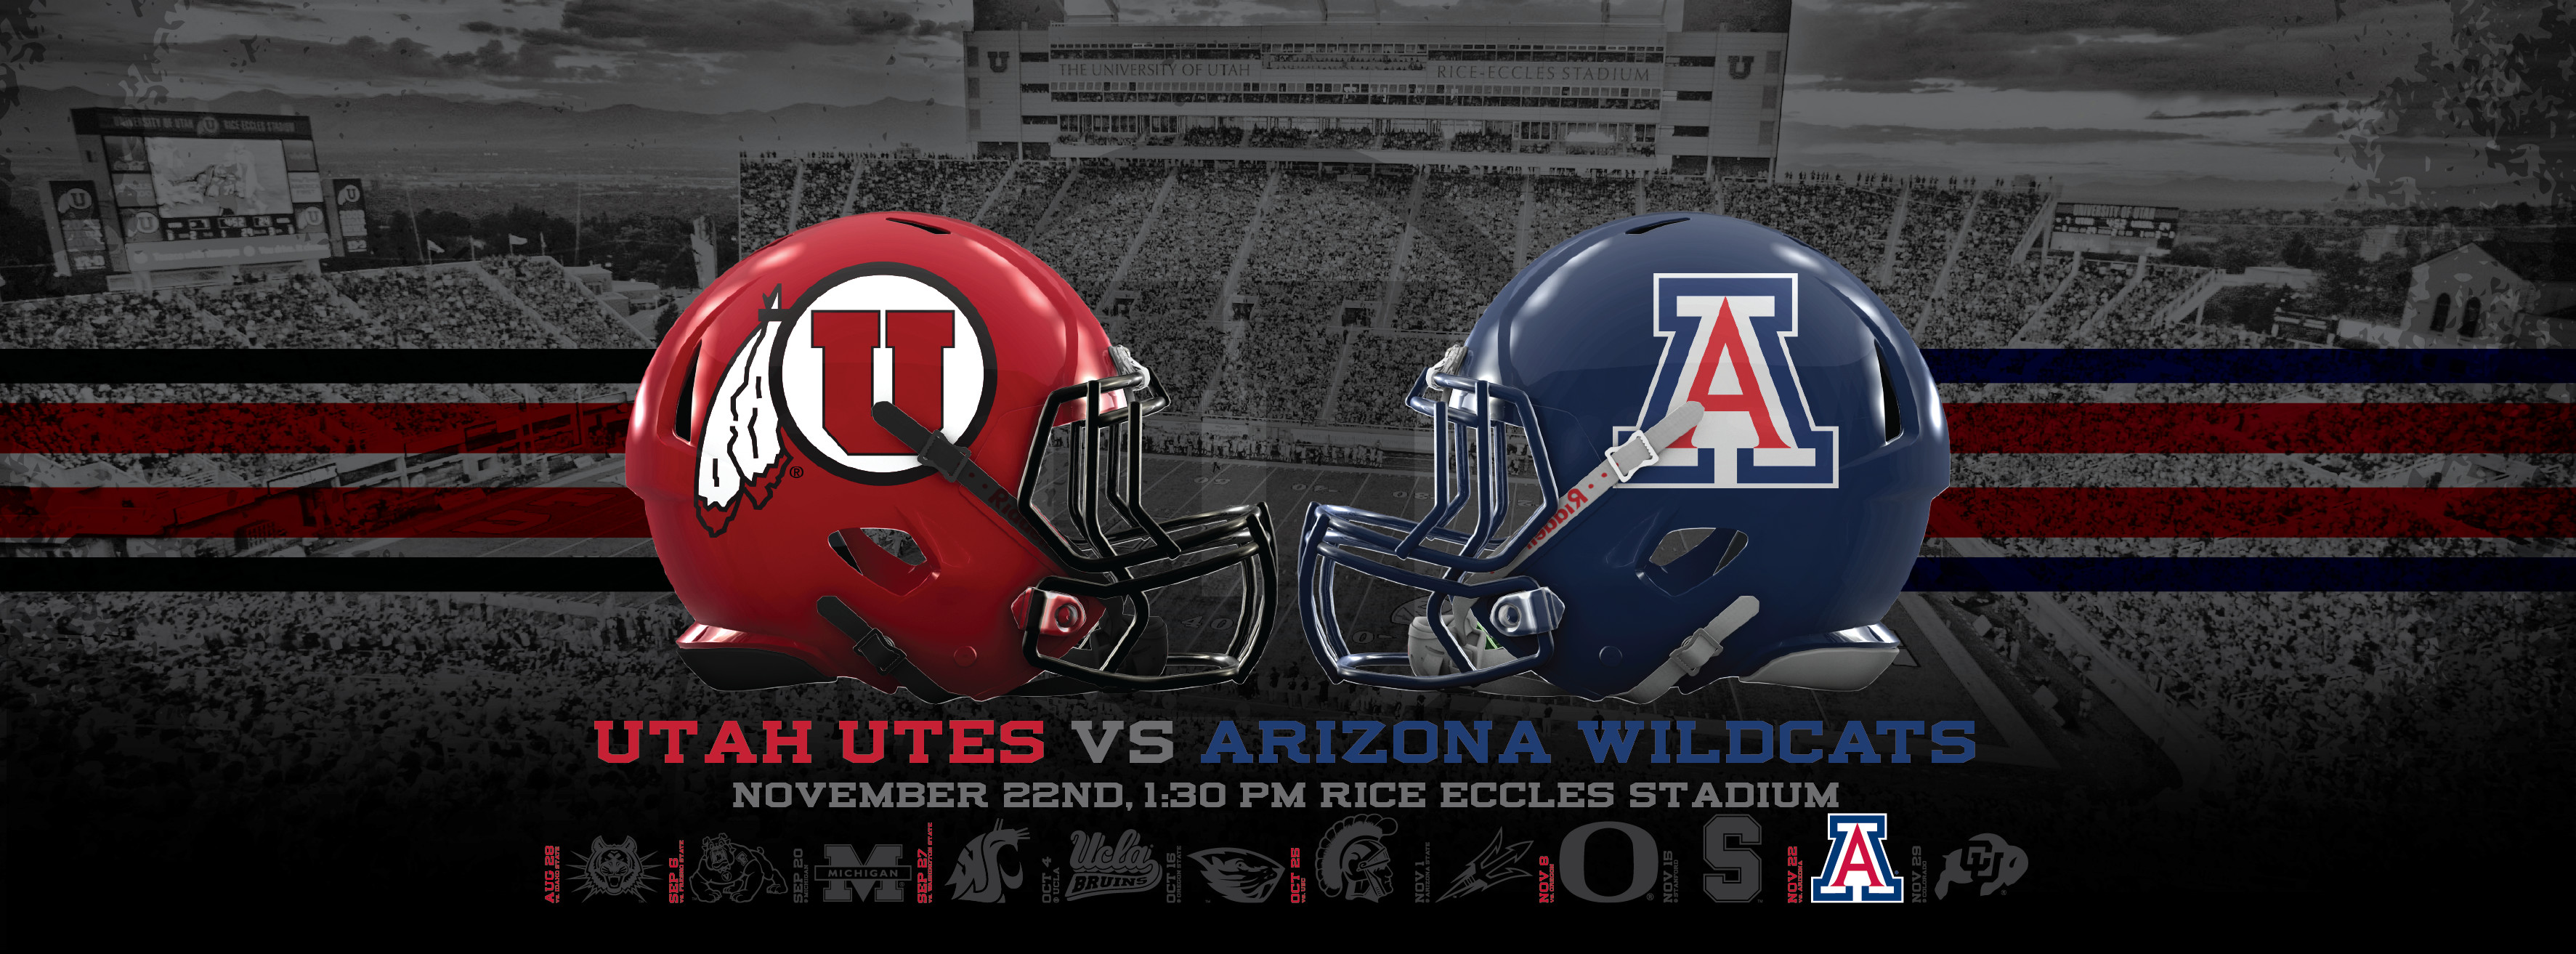 3546x1313 Utah Utes vs Arizona Wildcats Wallpapers Dahlelama 